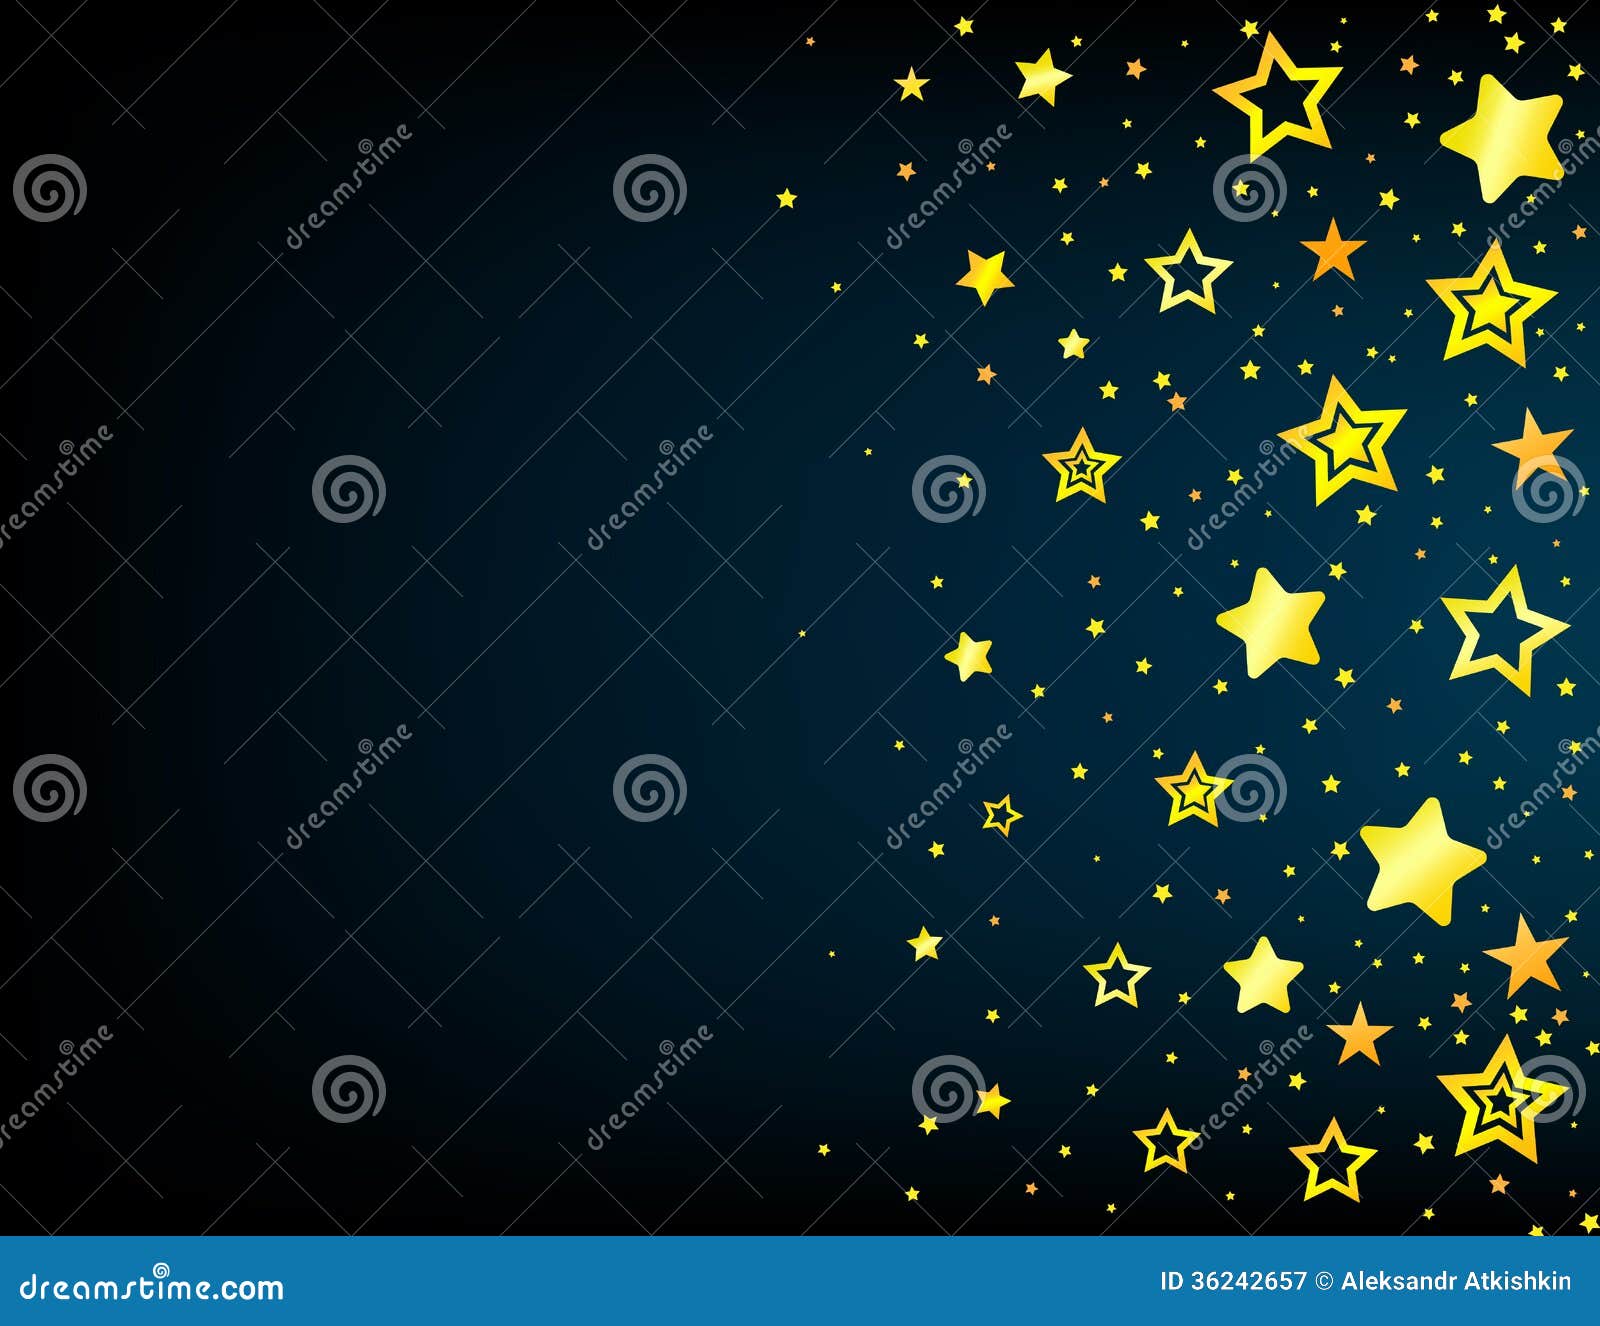 Cartoon Star Colored Background Stock Vector - Illustration of dream,  black: 36242657